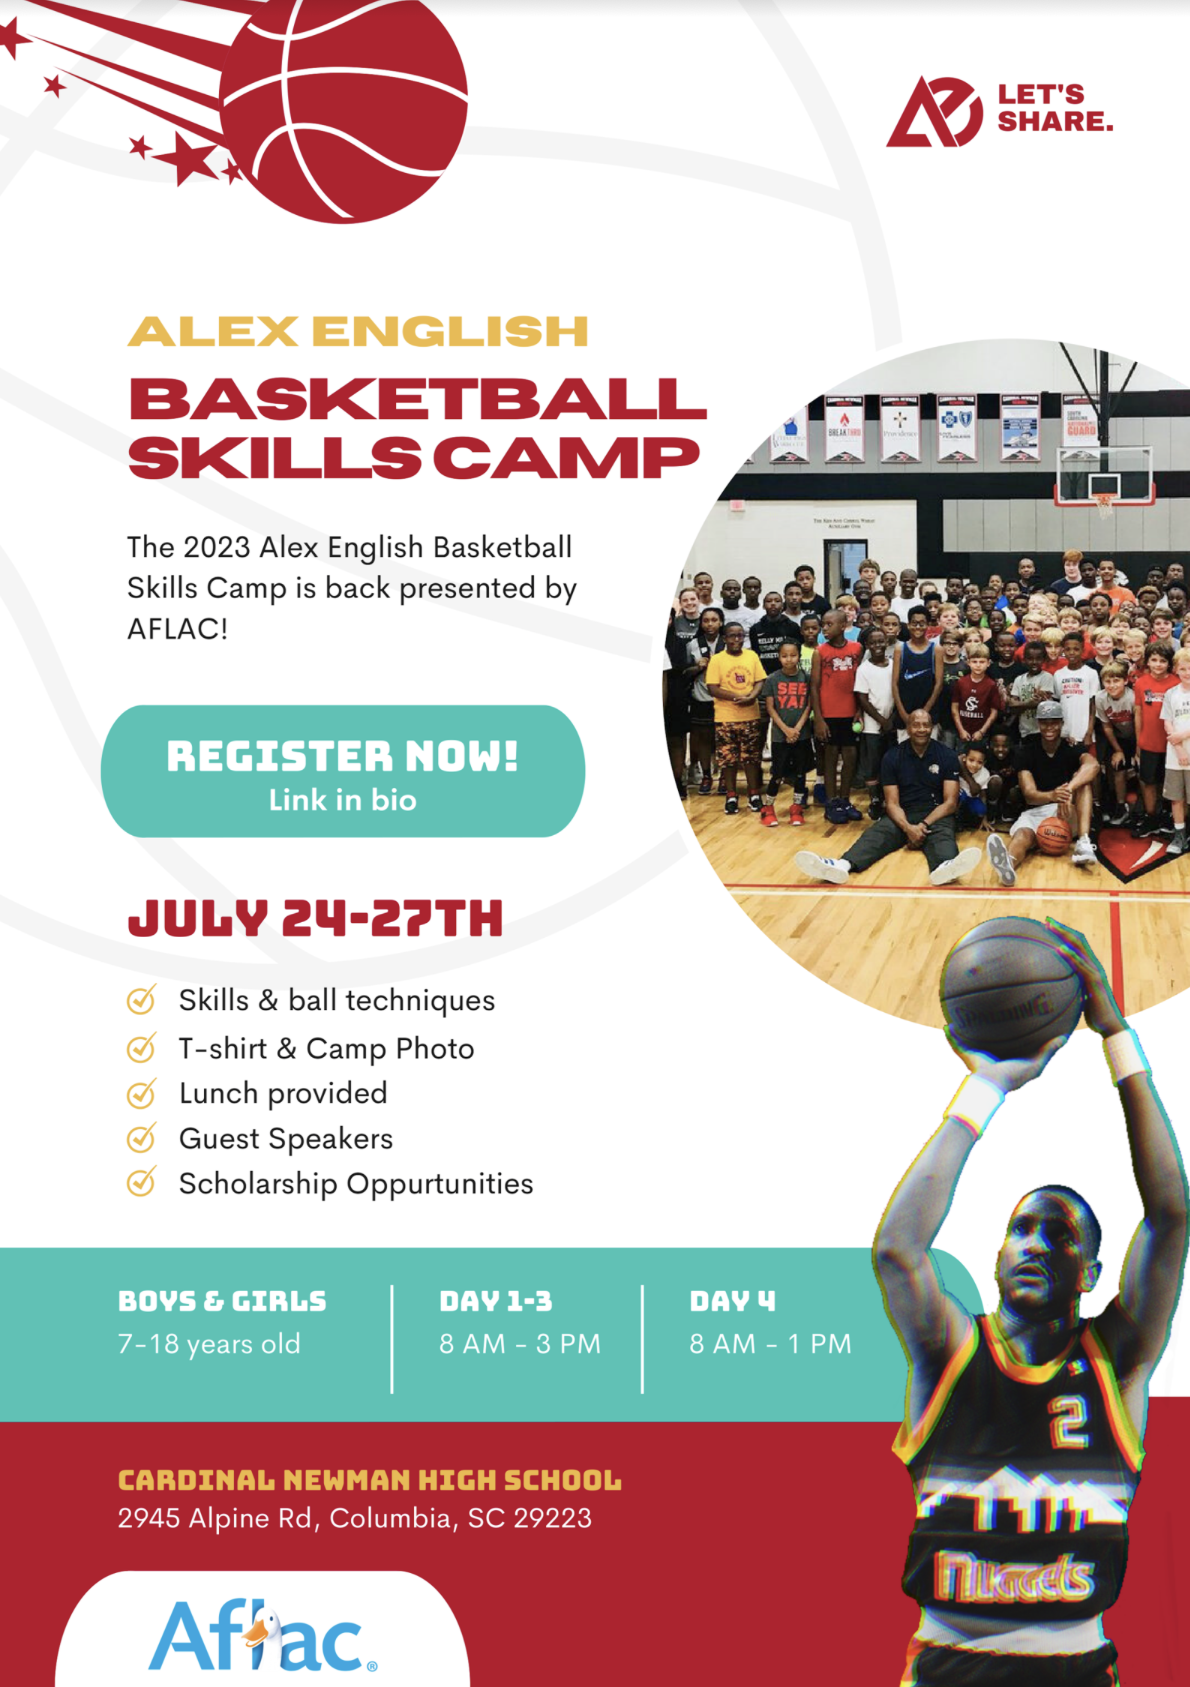 Alex English Basketball Skills Camp returns back to Cardinal Newman, Columbia